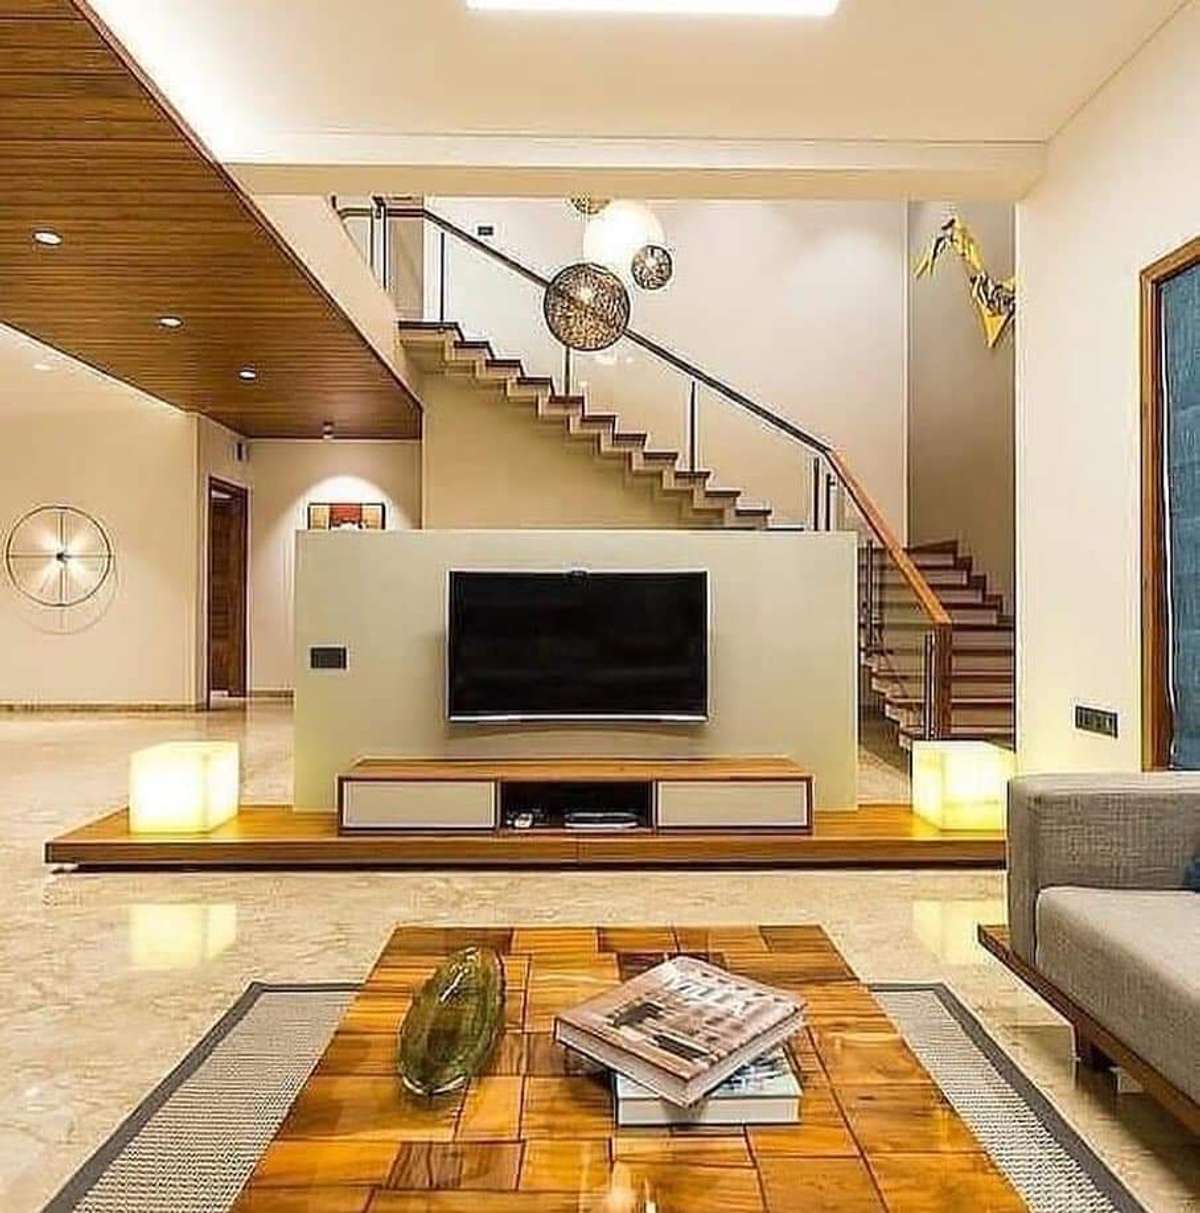 Best & impressive Living room design...
#monnaie #interiordesign #homedesign #architecturaldesign